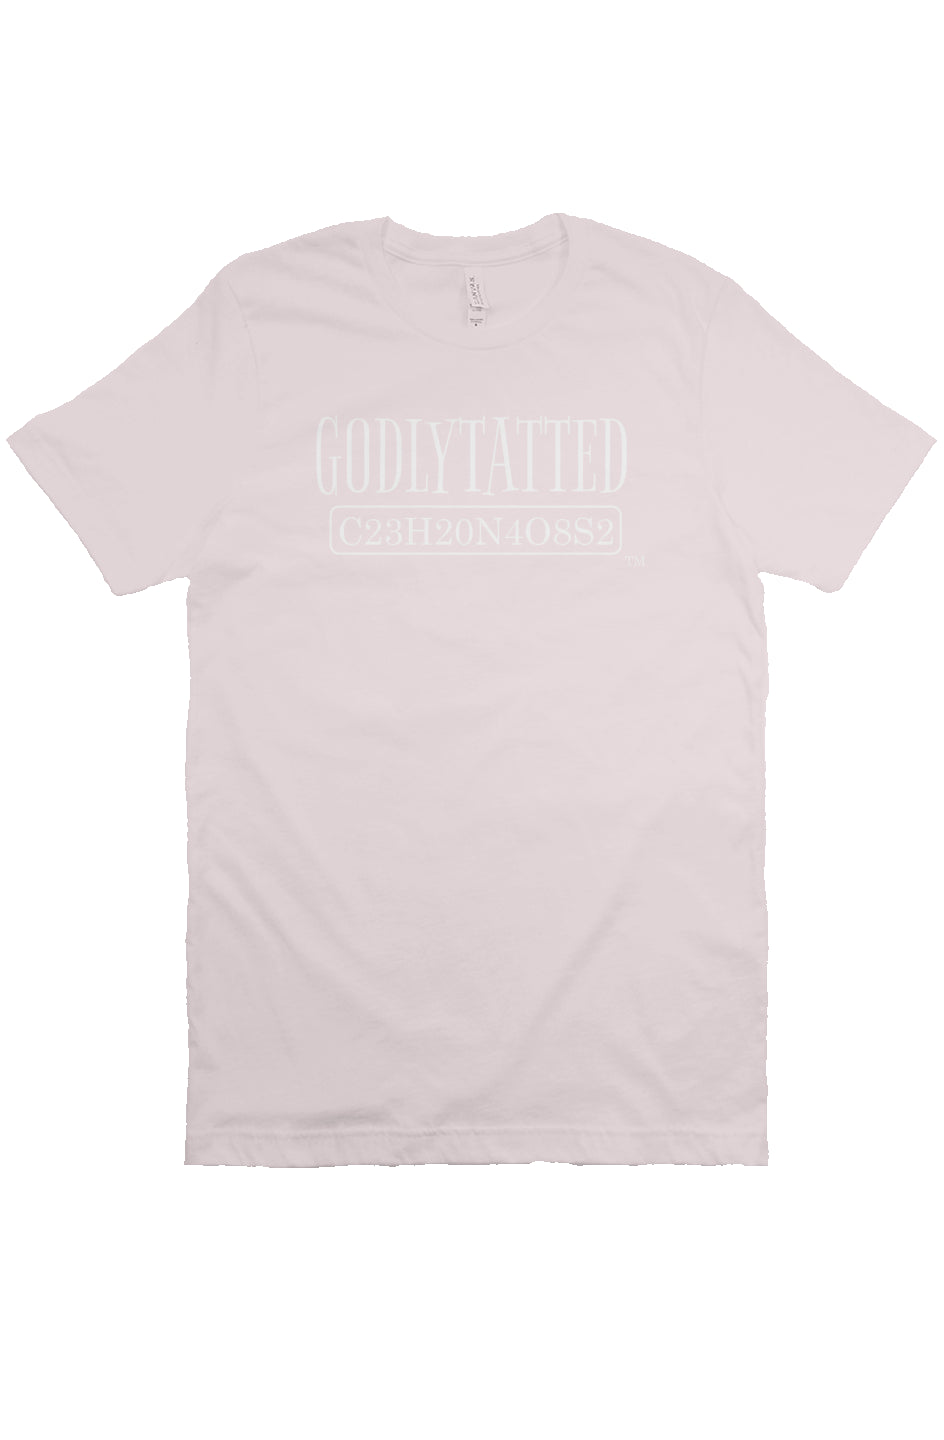 godlytatted - adult - soft pink - white logo